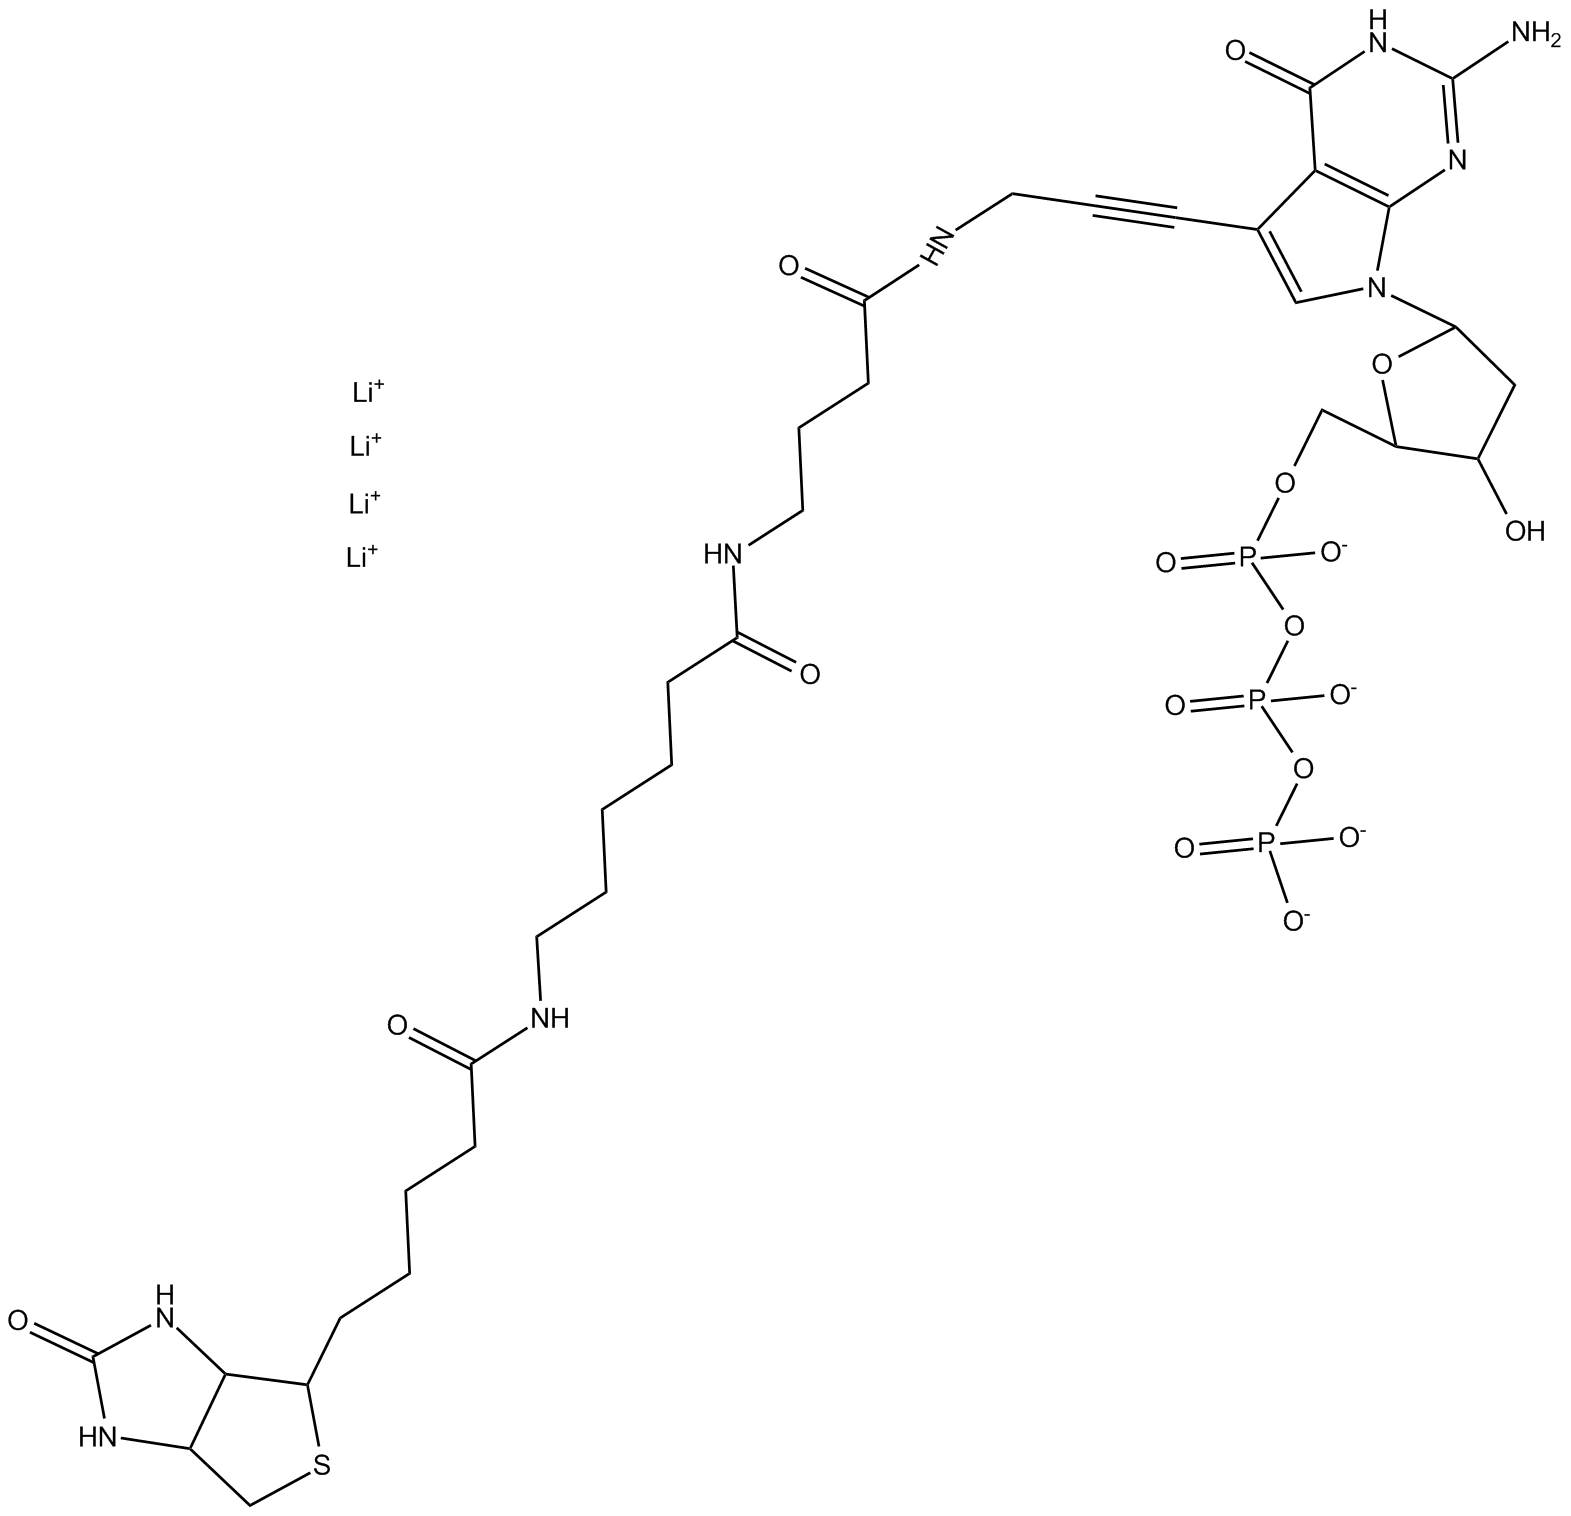 Biotin-16-dGTP